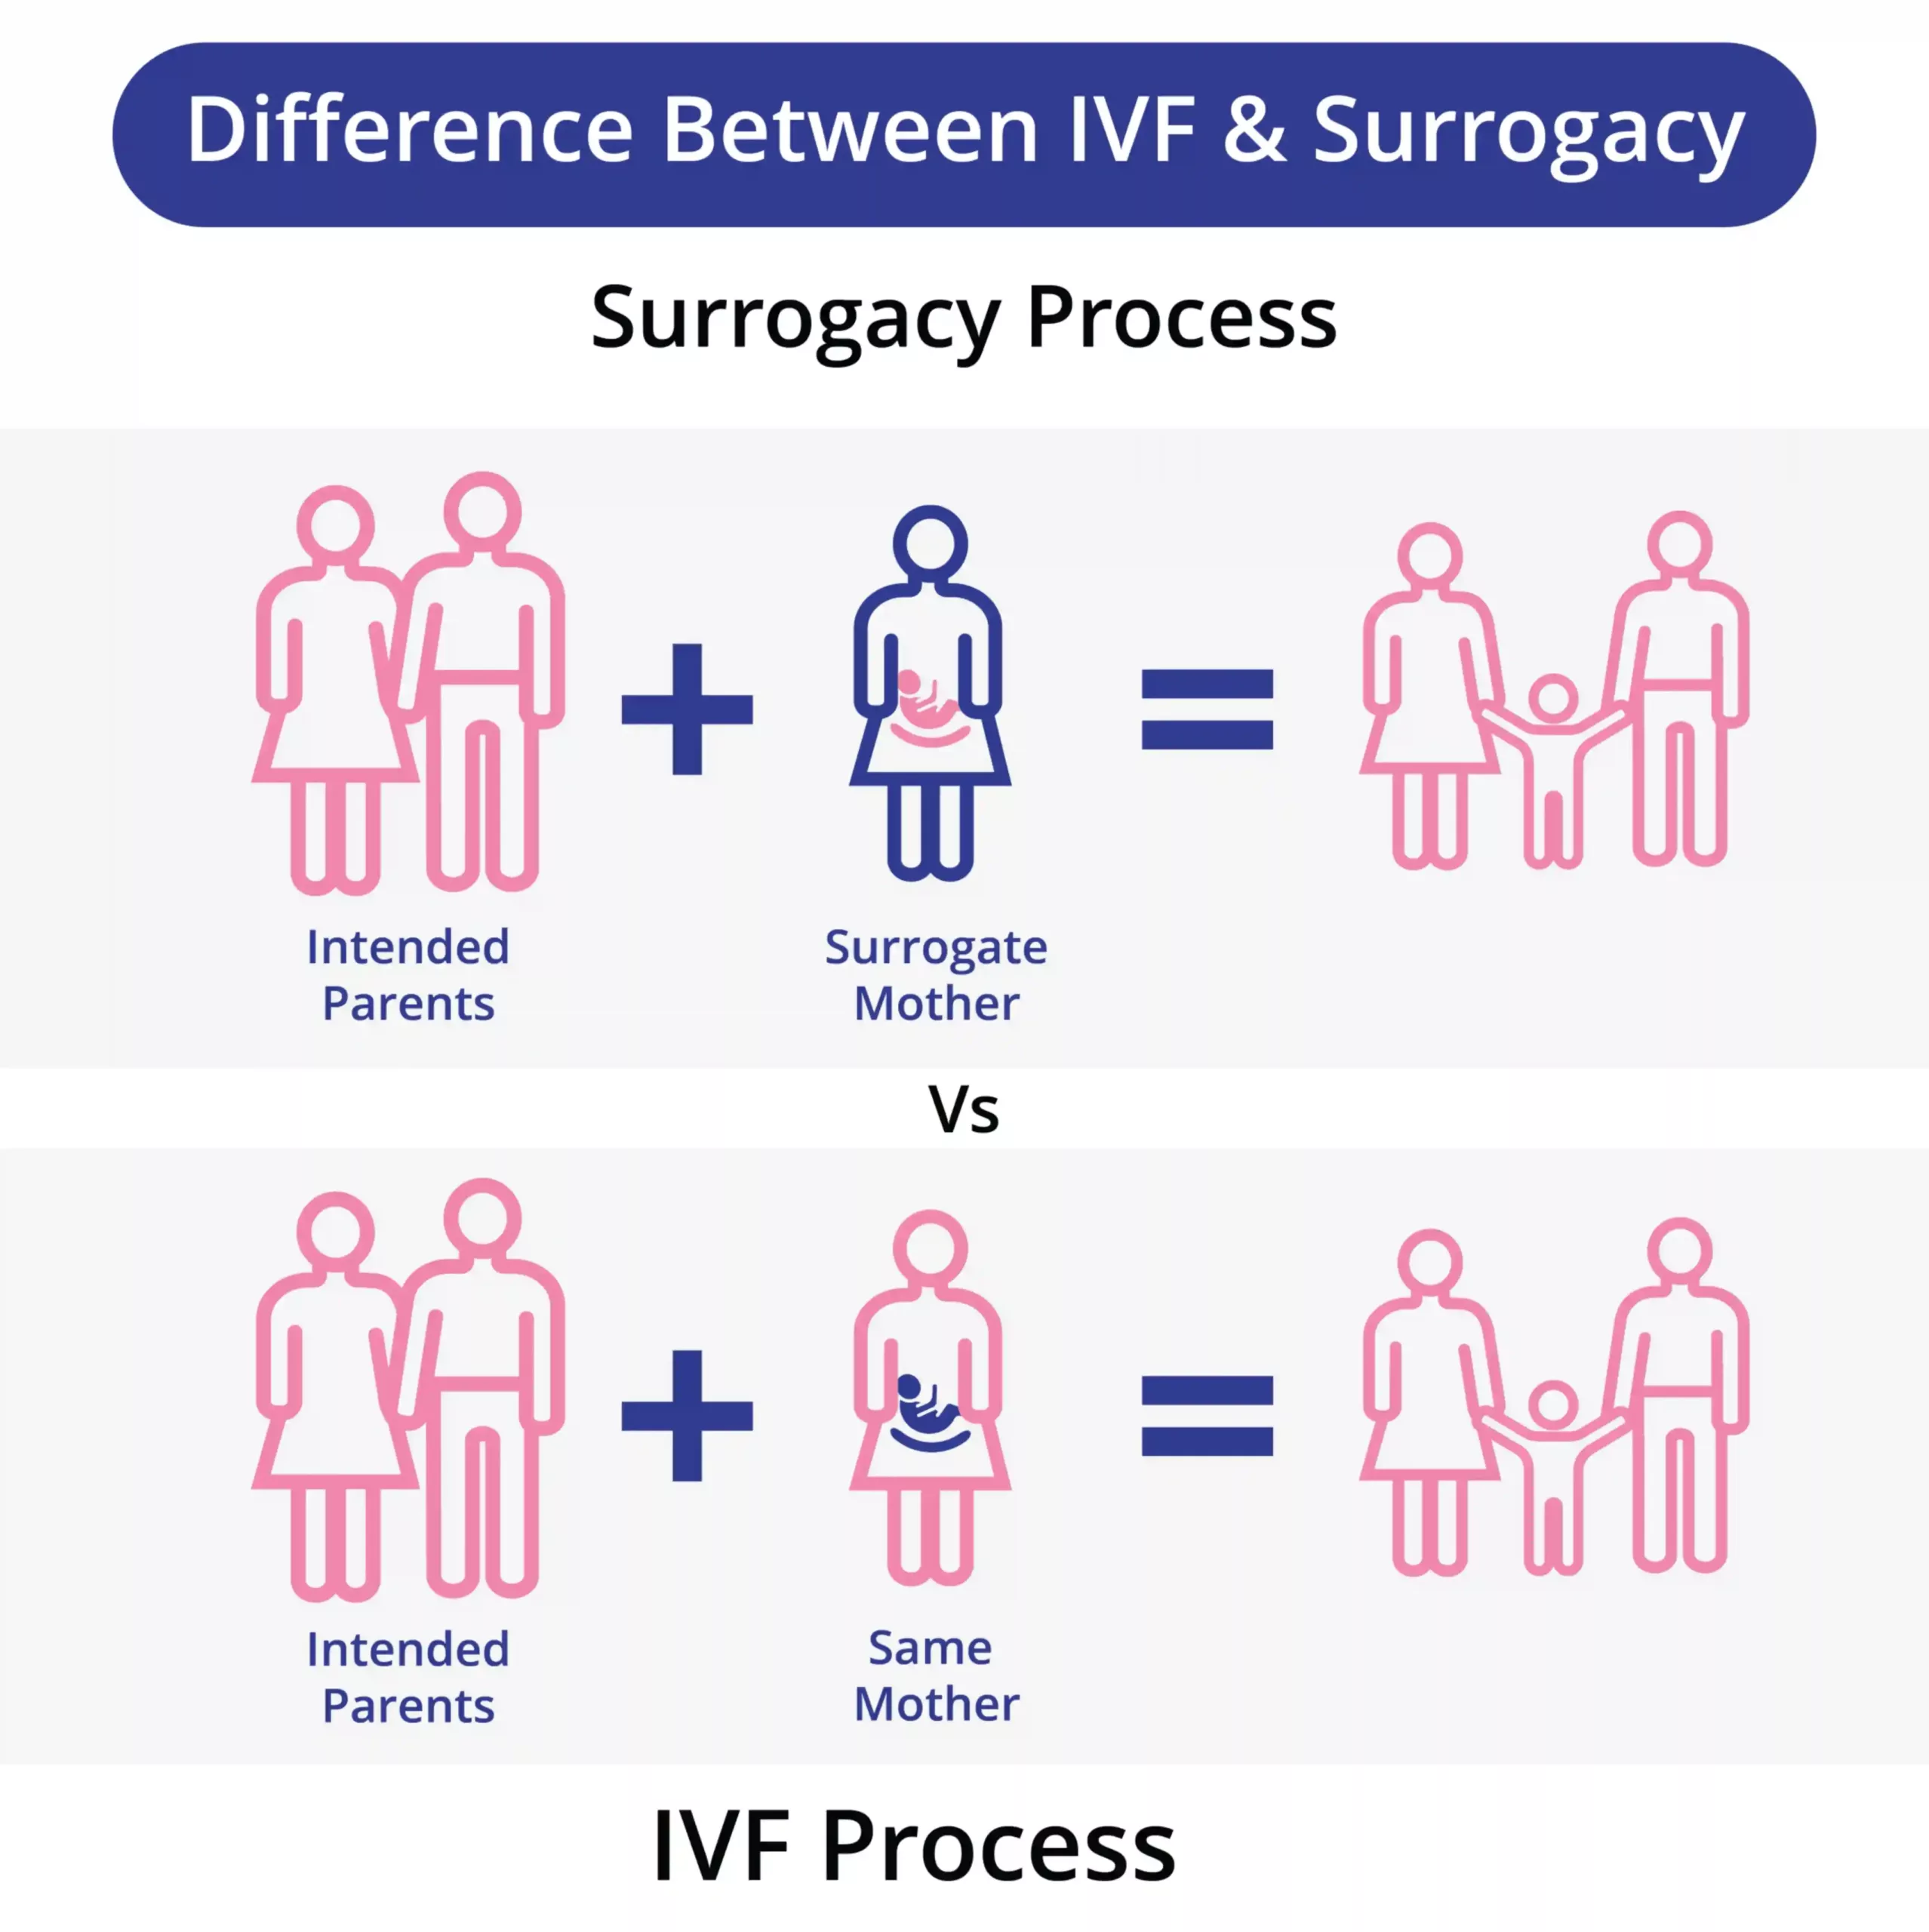 IVF Vs Surrogacy